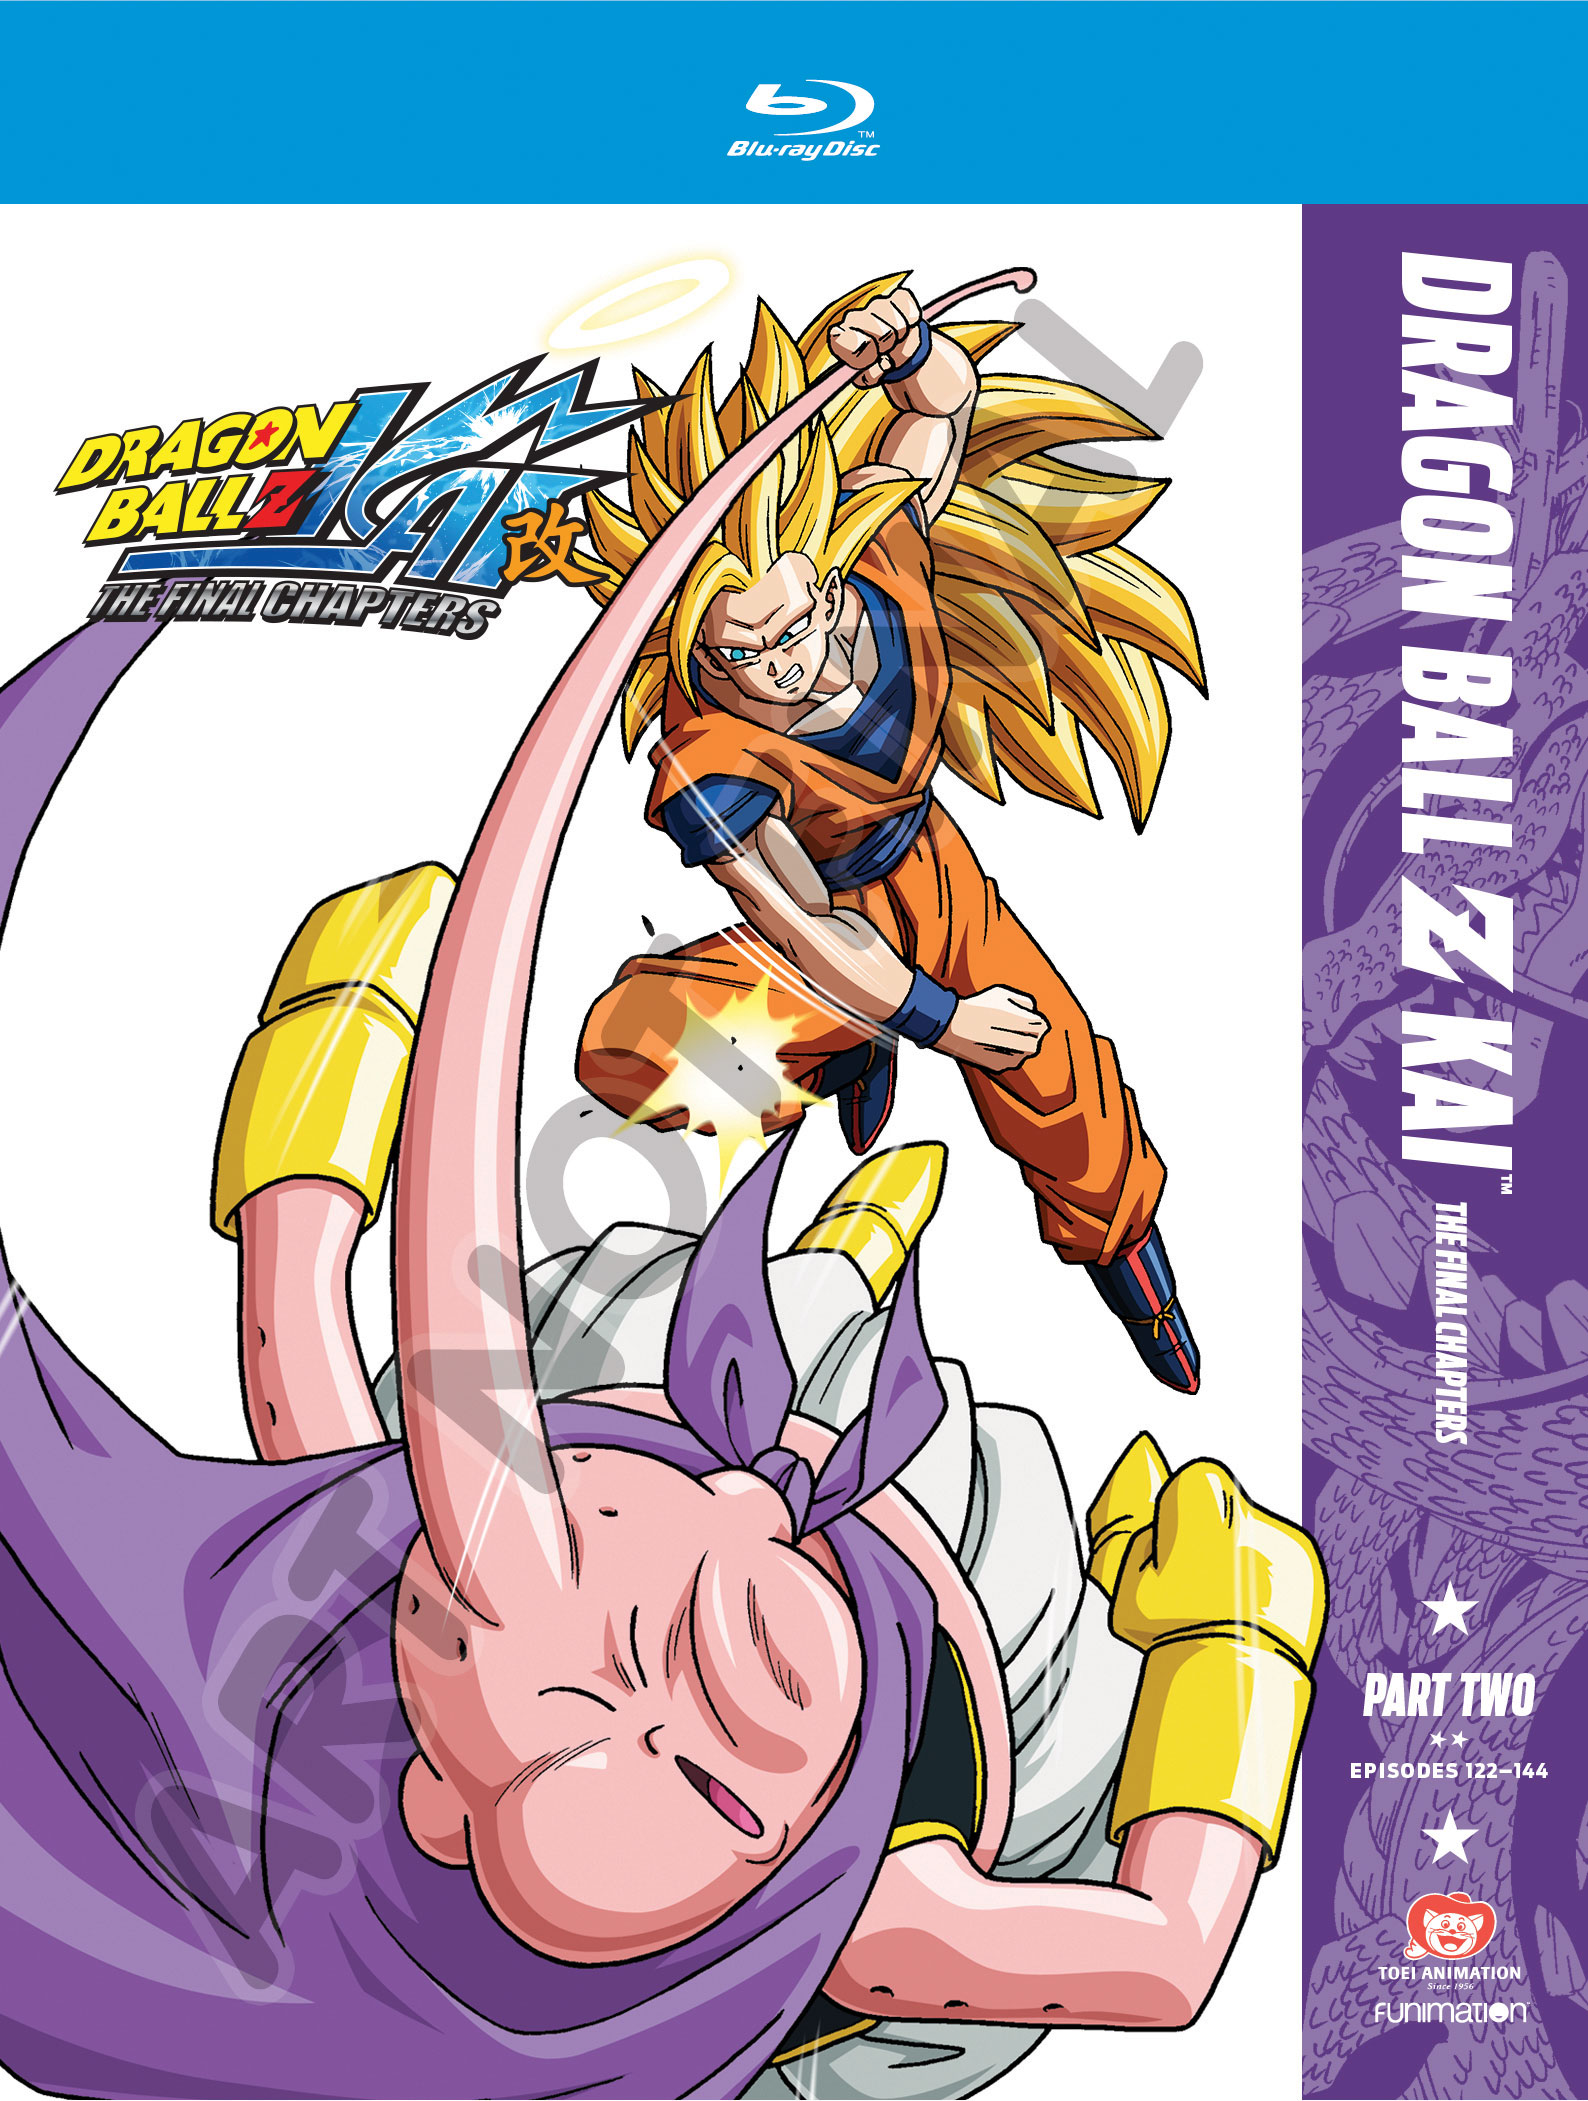 The Dragon Ball Z Kai - Final Chapters : Part 2 : Eps 24-47 DVD